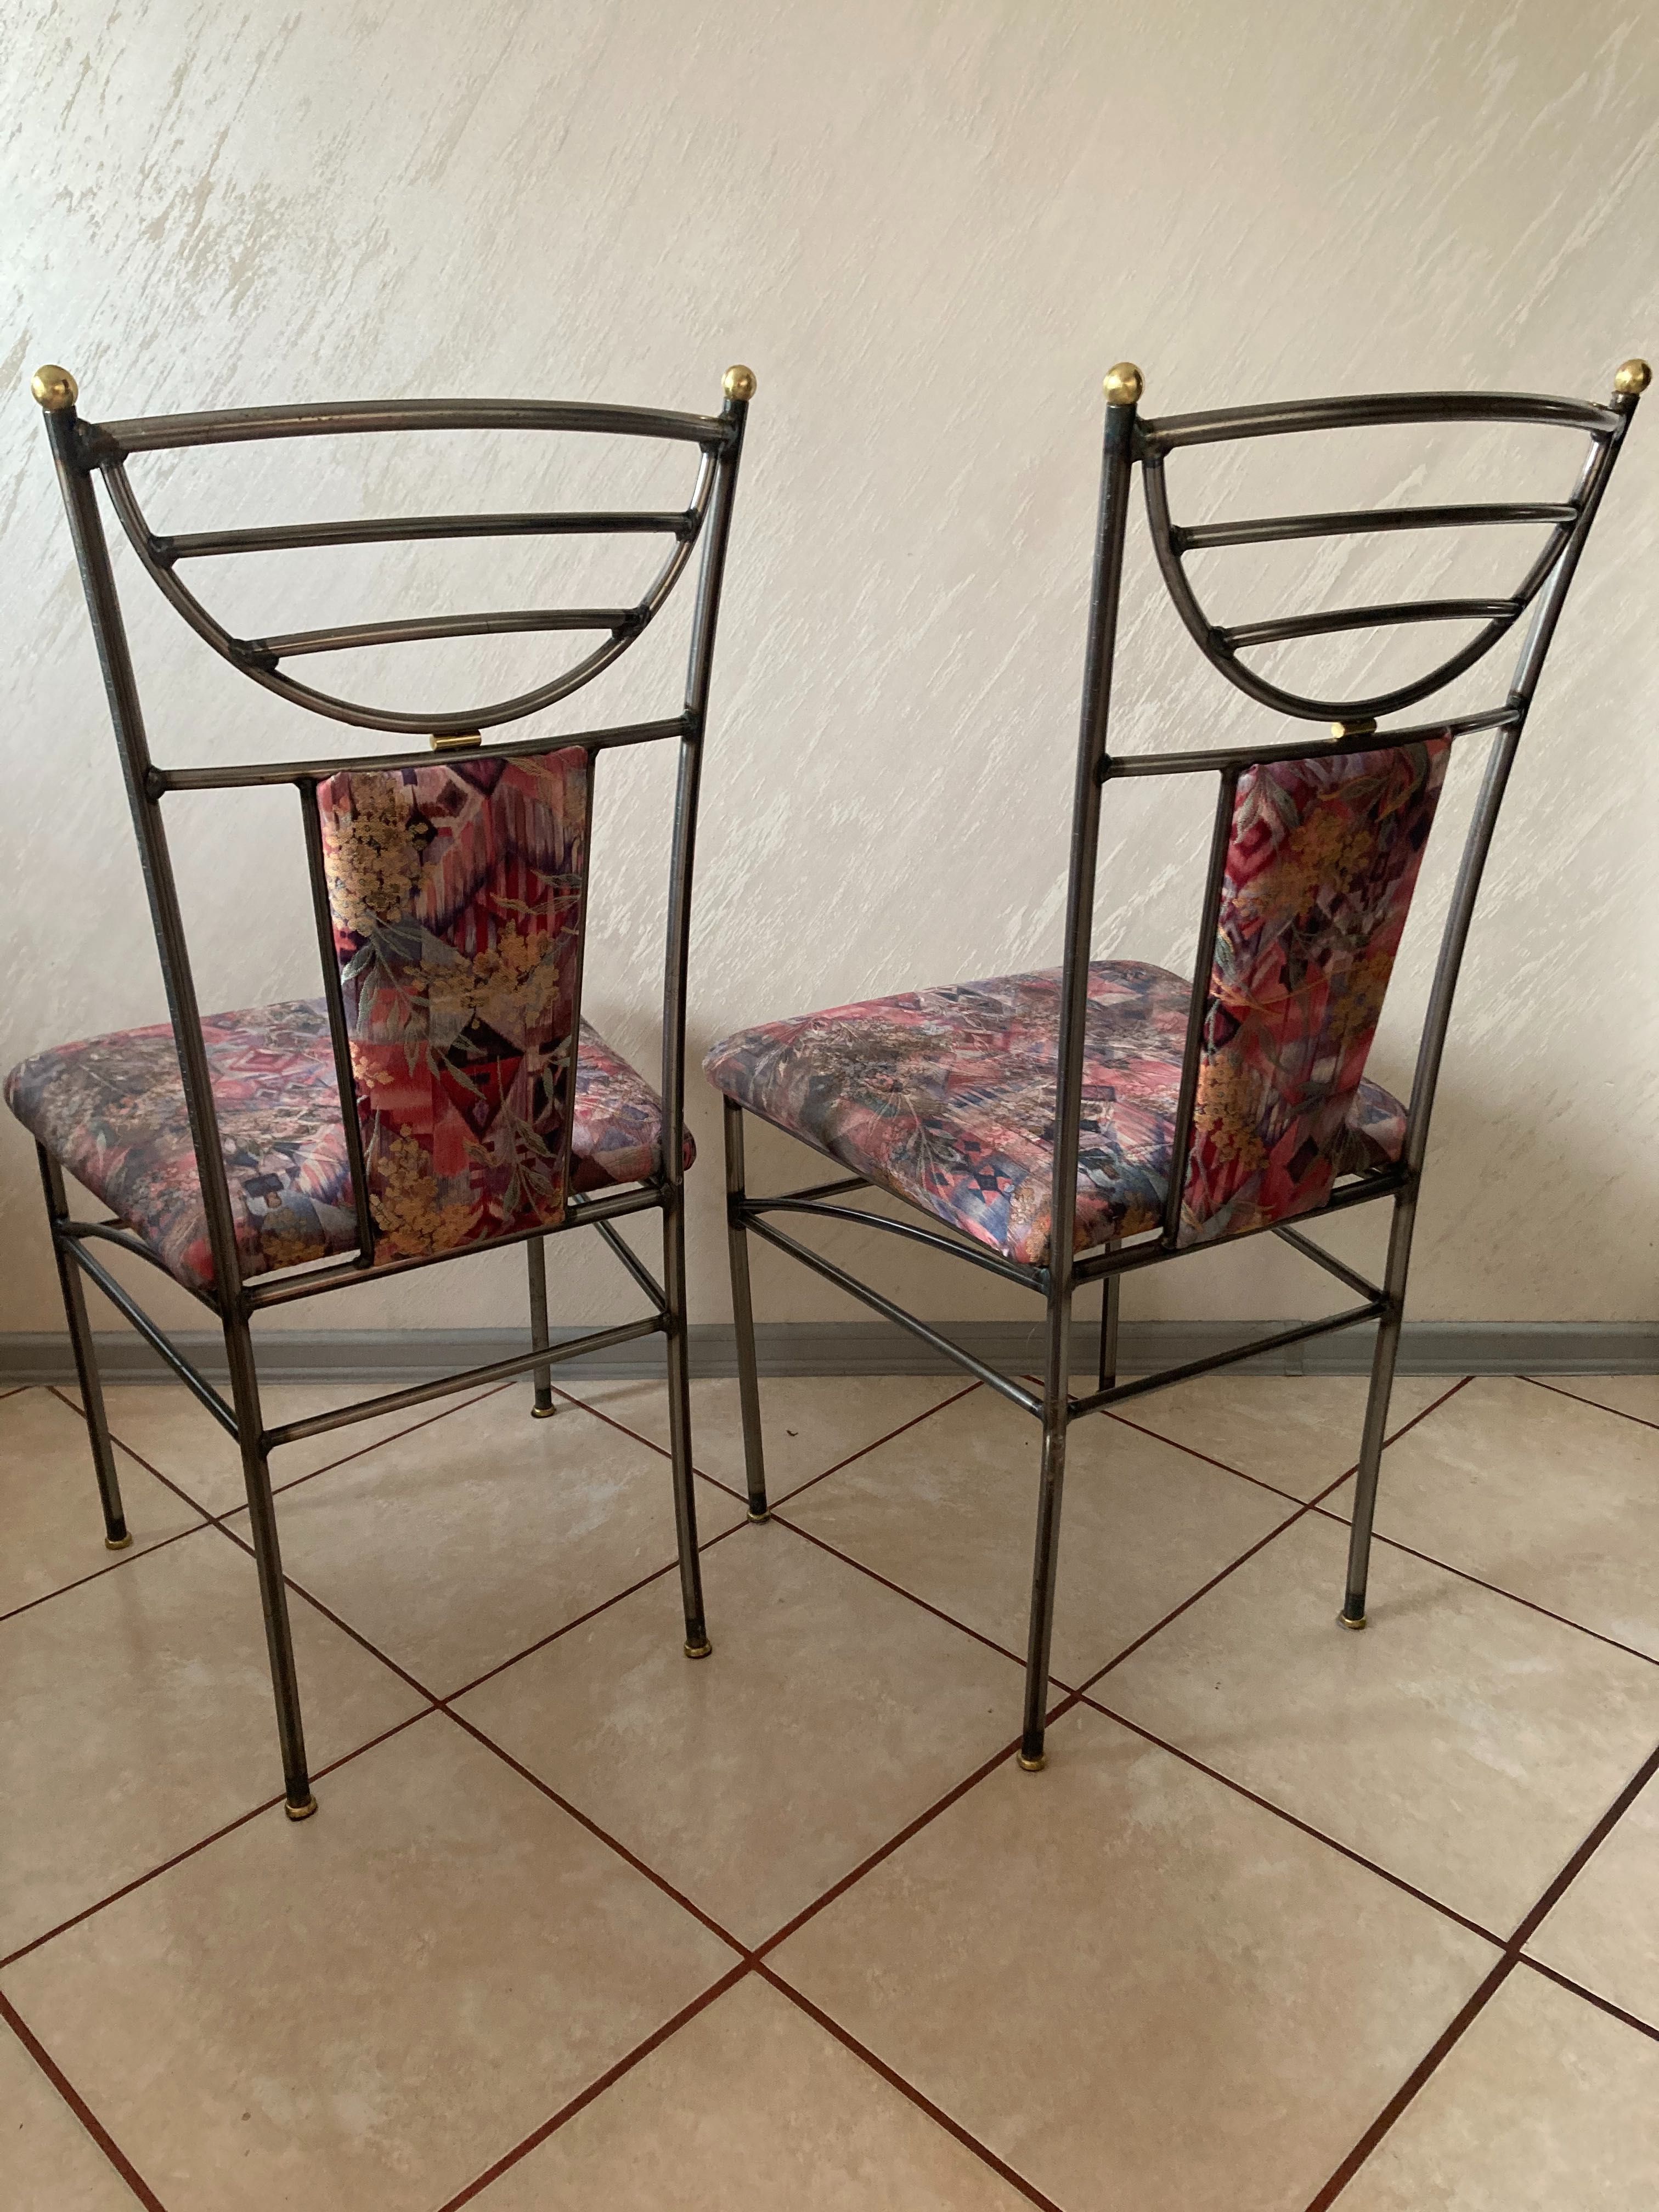 Krzesła stalowe metalowe mosiężne detale